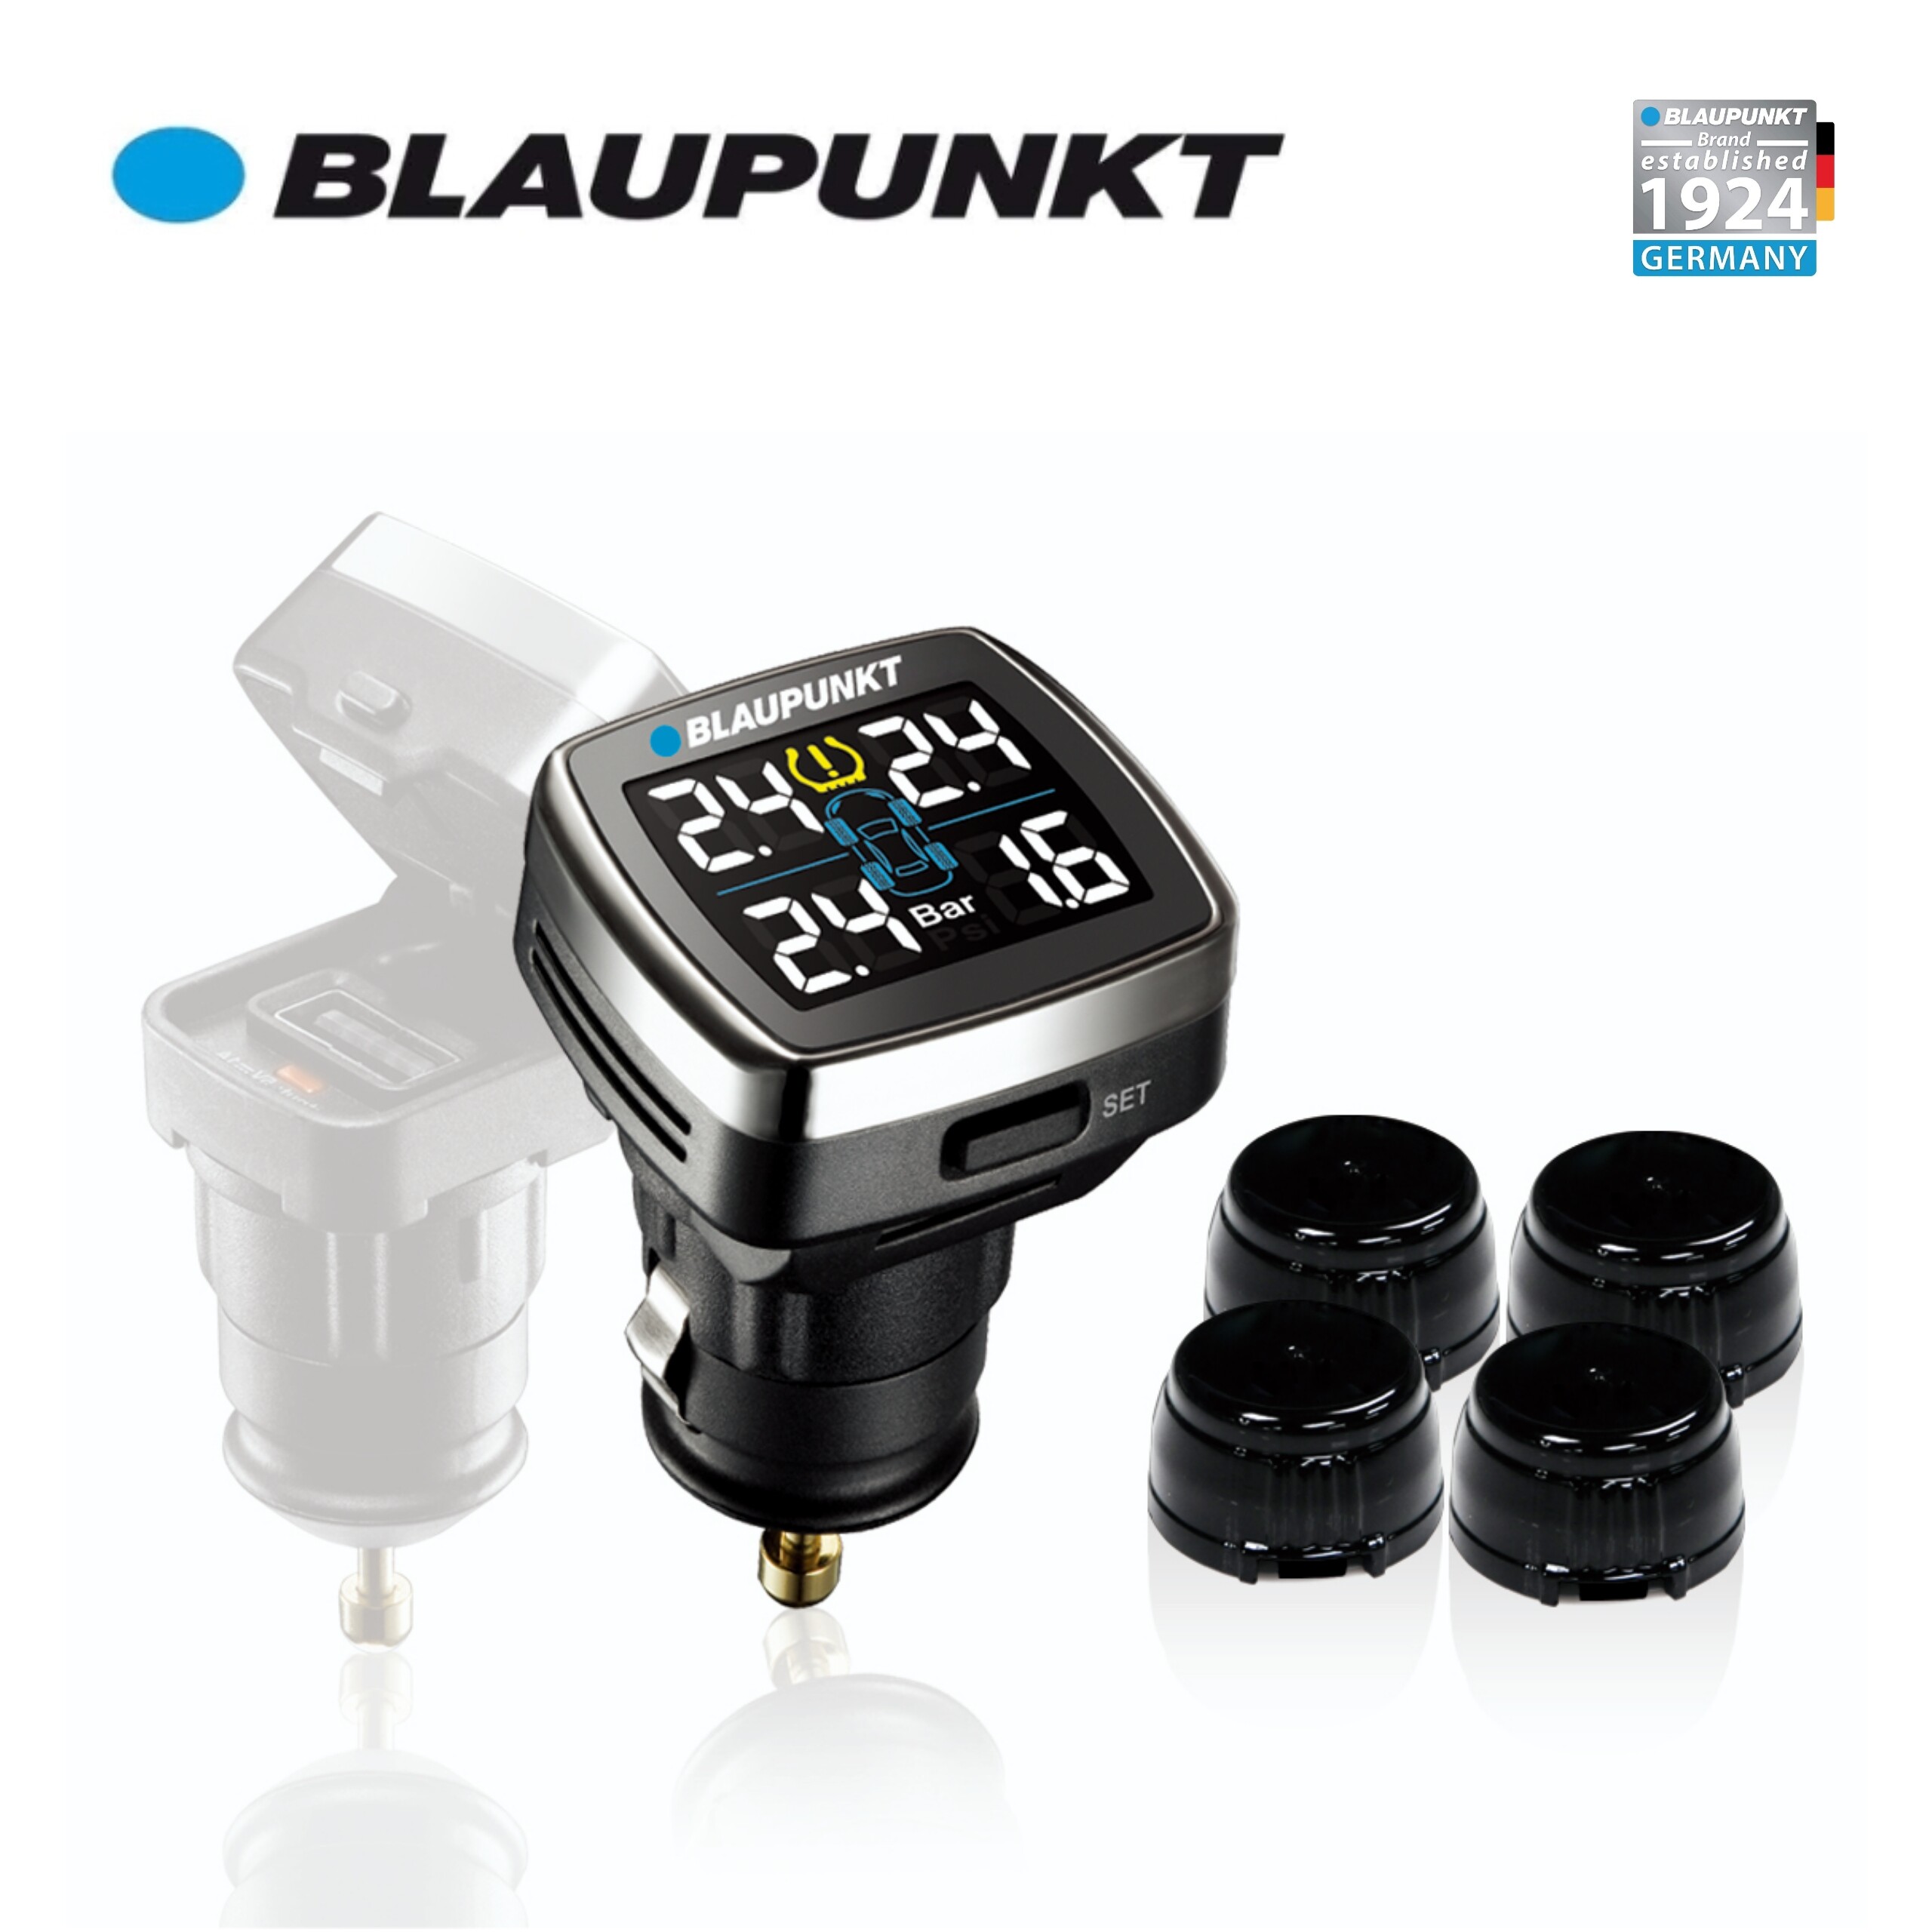 BLAUPUNKT เครื่องวัดแรงดันลมยางรถยนต์ รุ่น TPM 2.14 USB